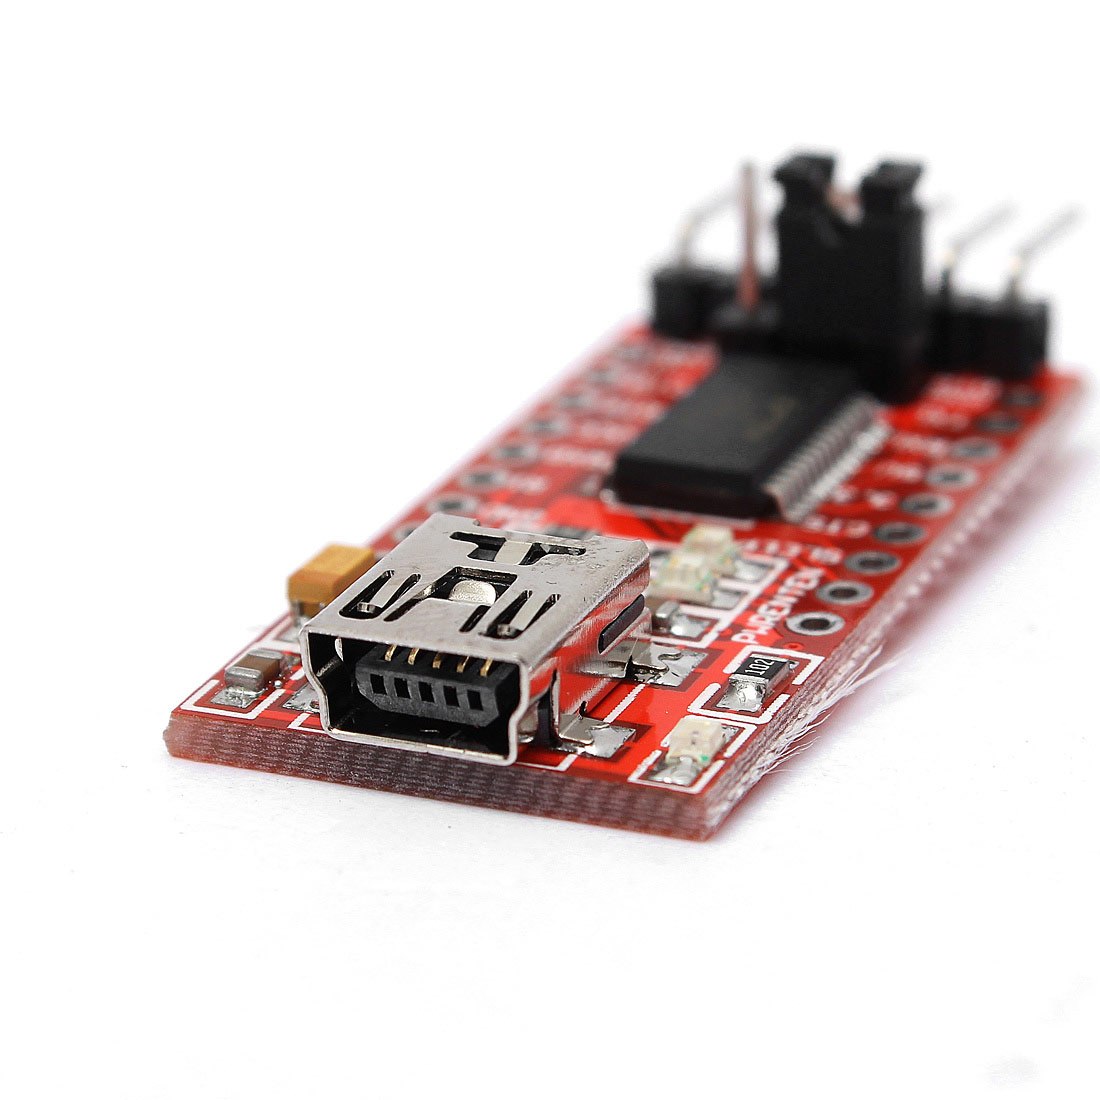 Geekcreitreg-FT232RL-FTDI-USB-To-TTL-Serial-Converter-Adapter-Module-Geekcreit-for-Arduino---product-917226-4